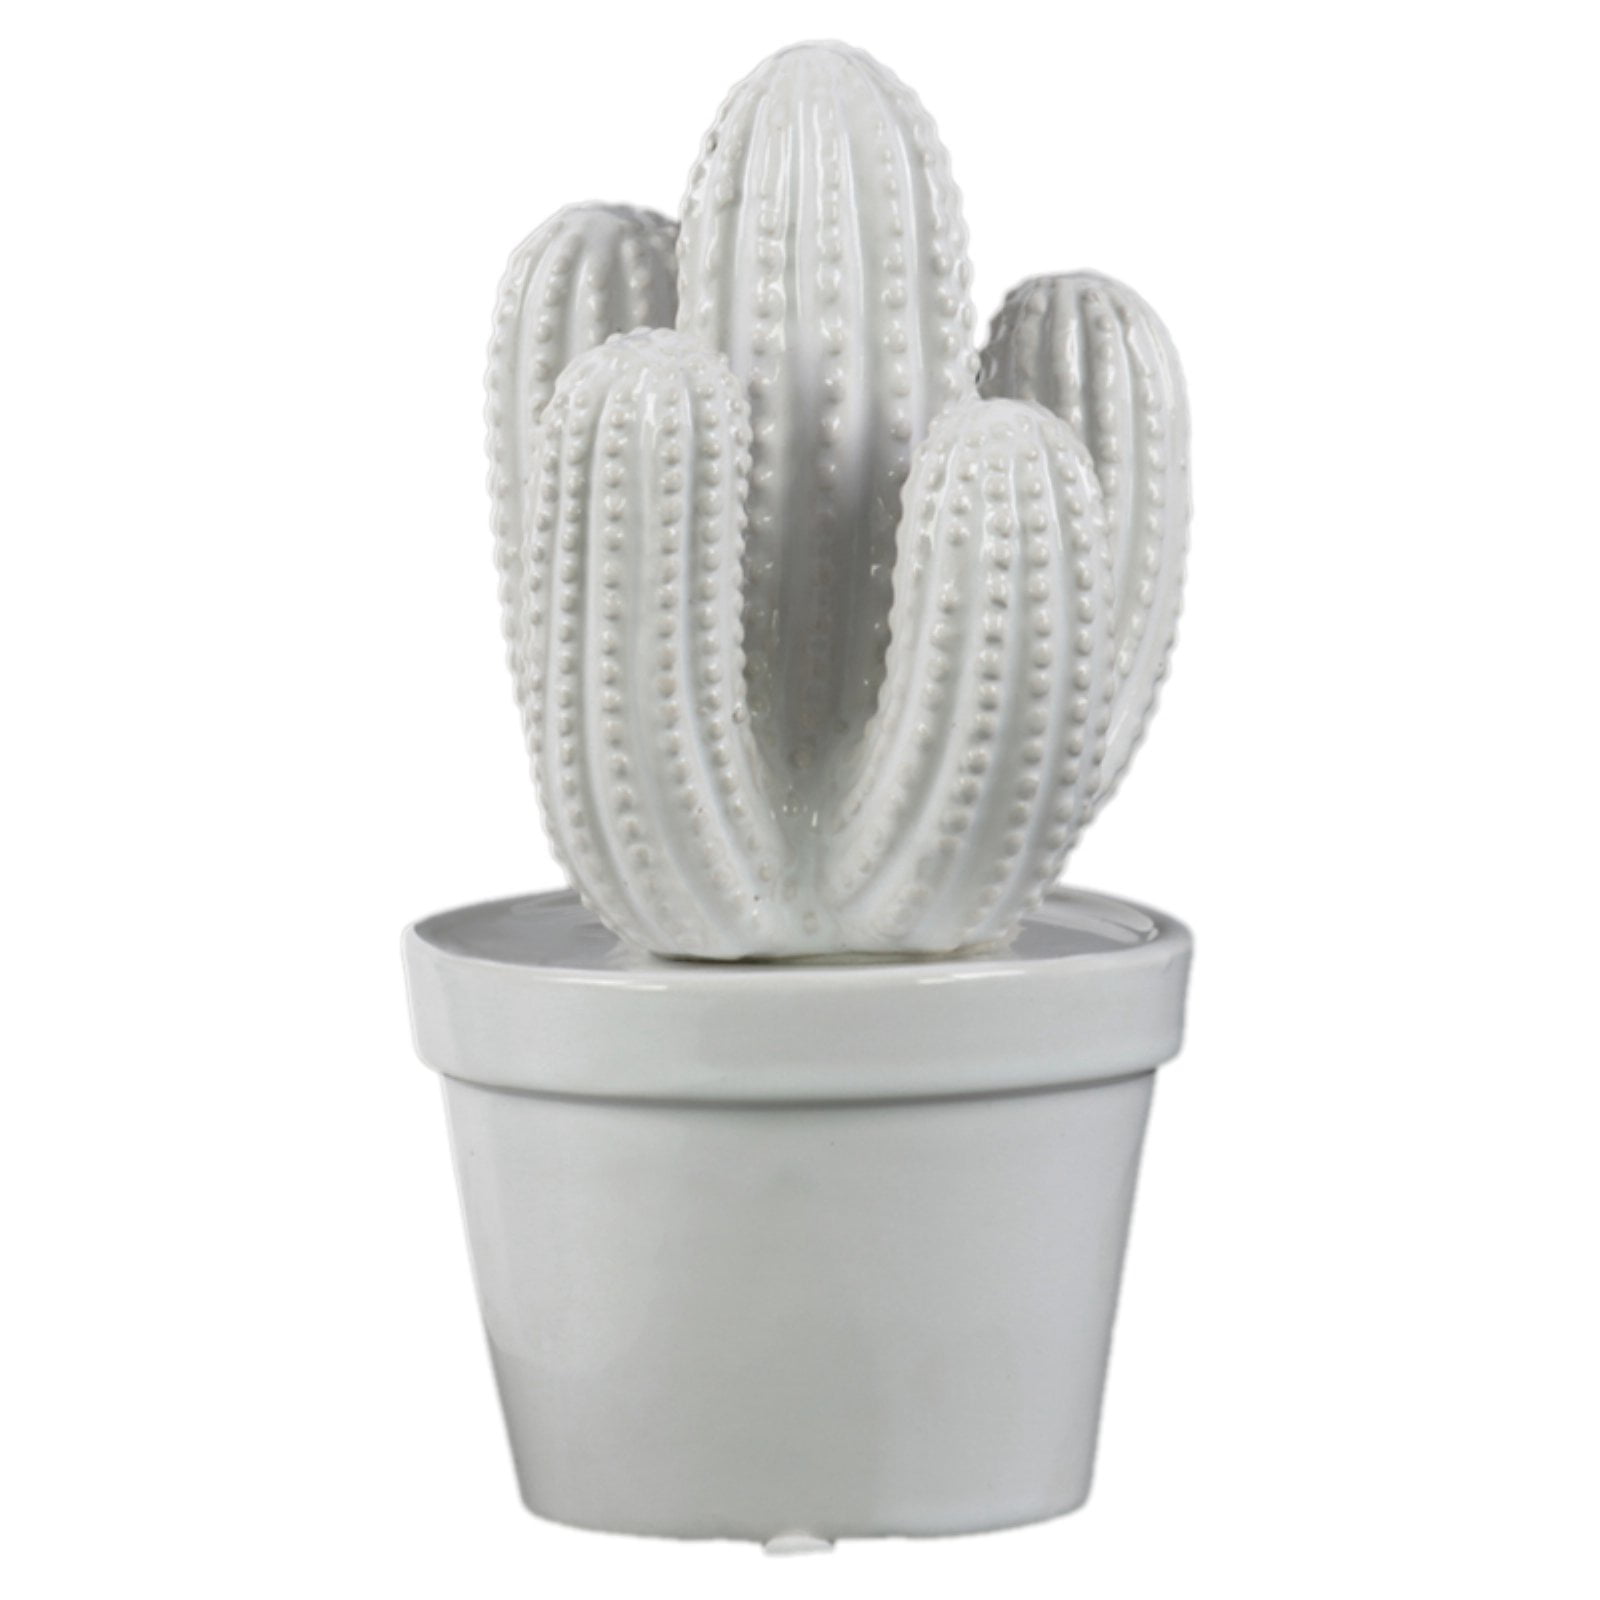 Urban Trends Ceramic San Pedro Cactus Pot Gloss Finish White Figurine